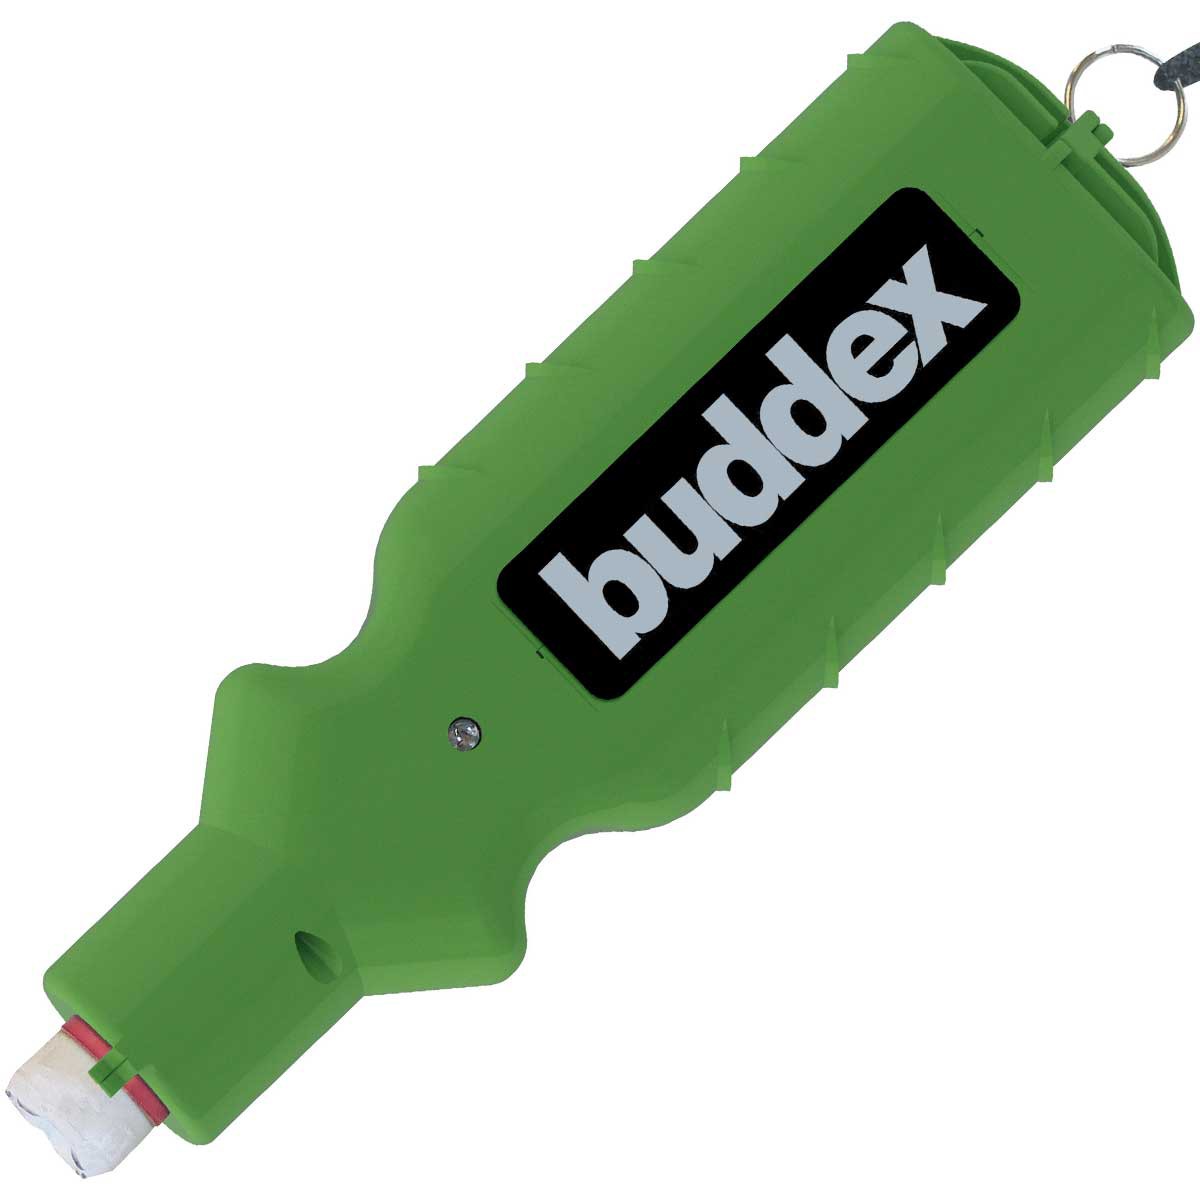 Dehorner Buddex battery-operated